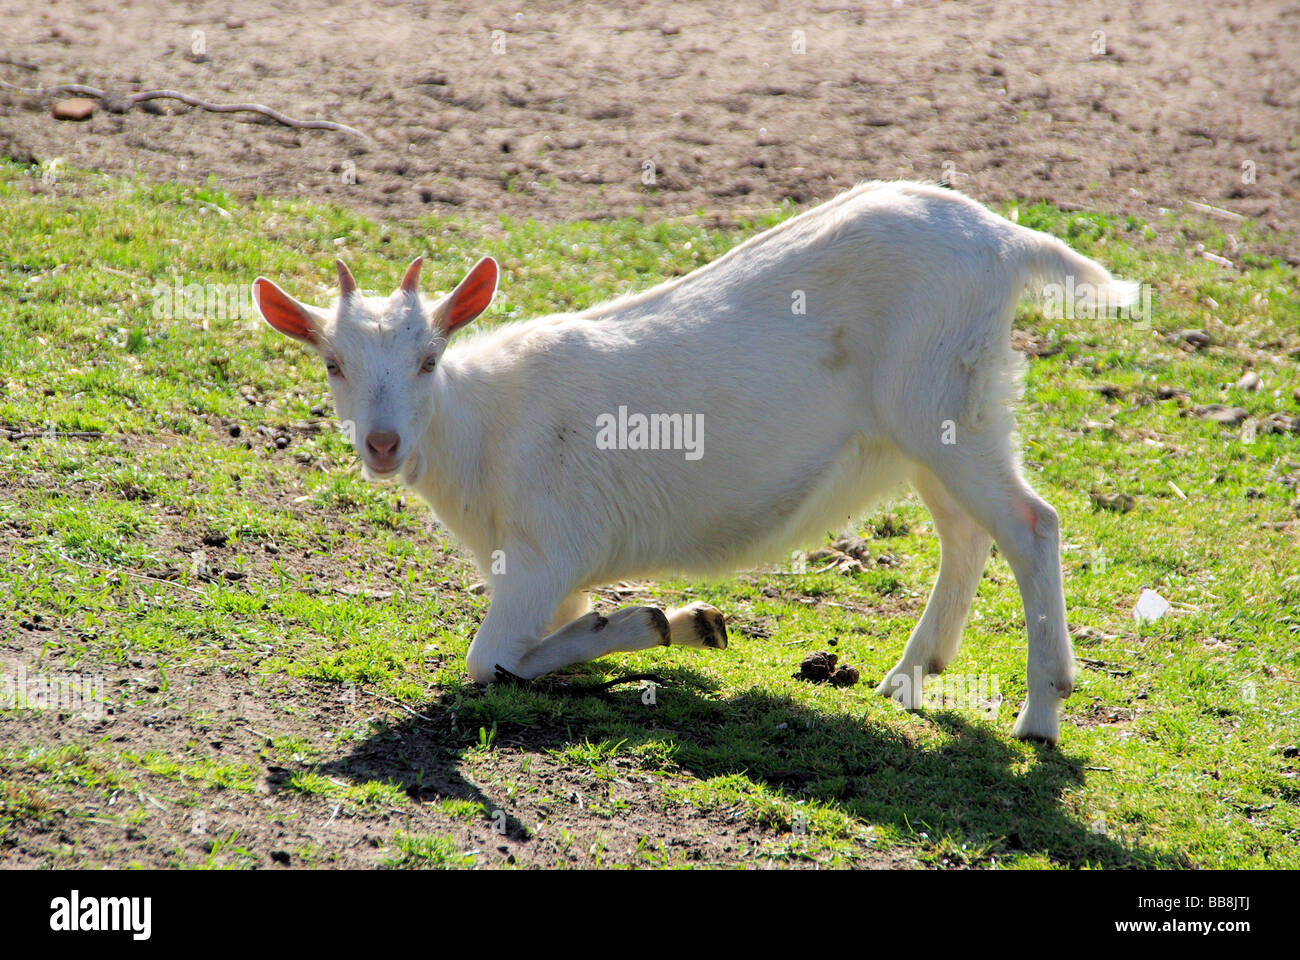 Ziege goat 21 Stock Photo